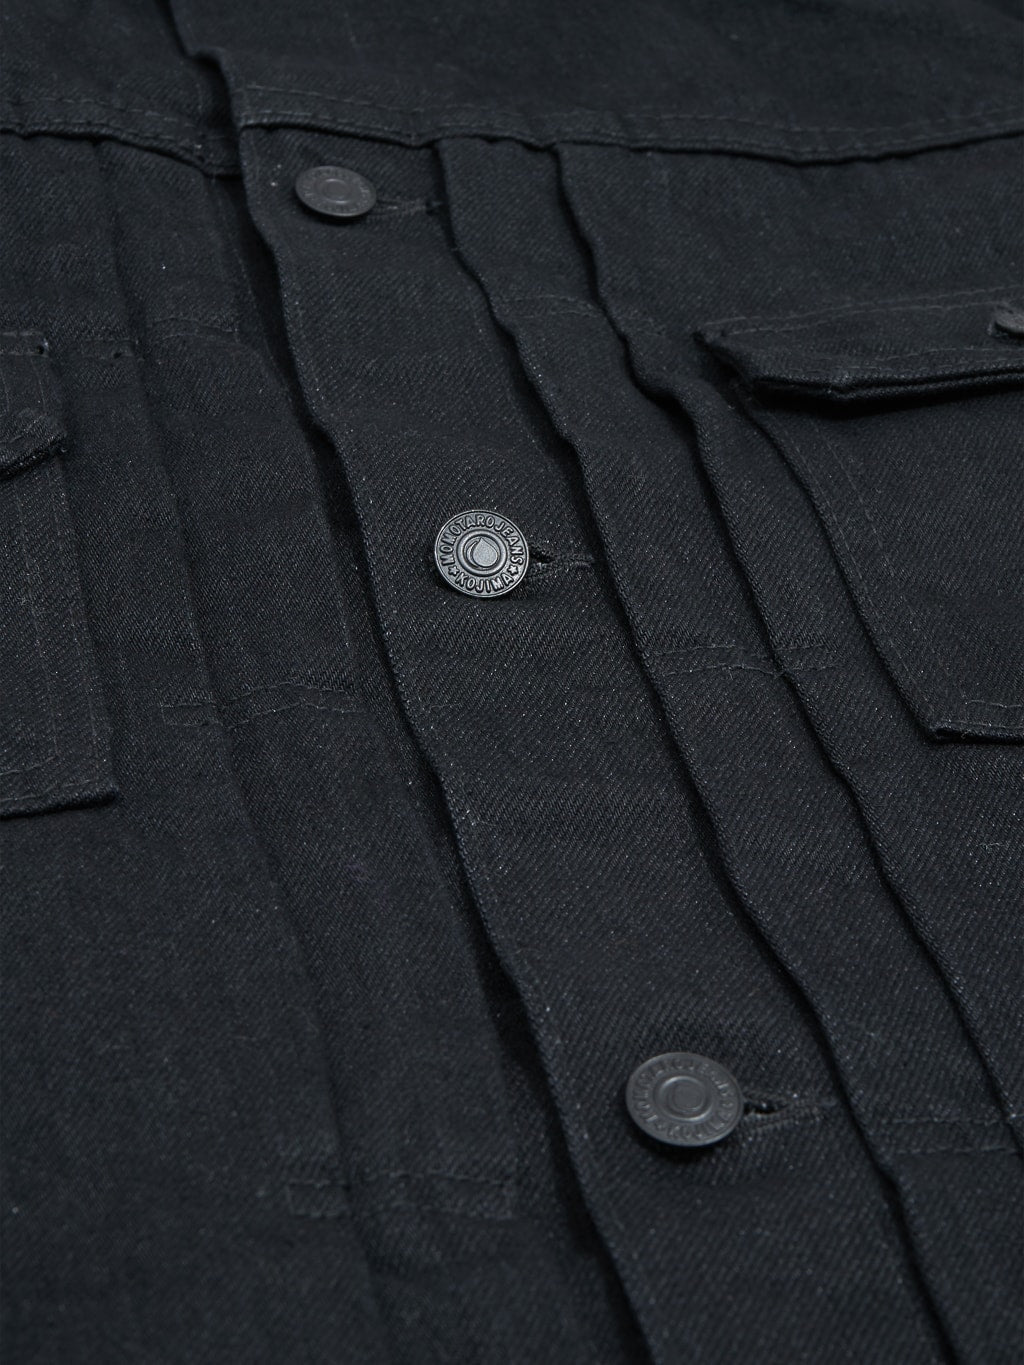 Momotaro MXGJ1108 Black x Black Type II Jacket  buttons